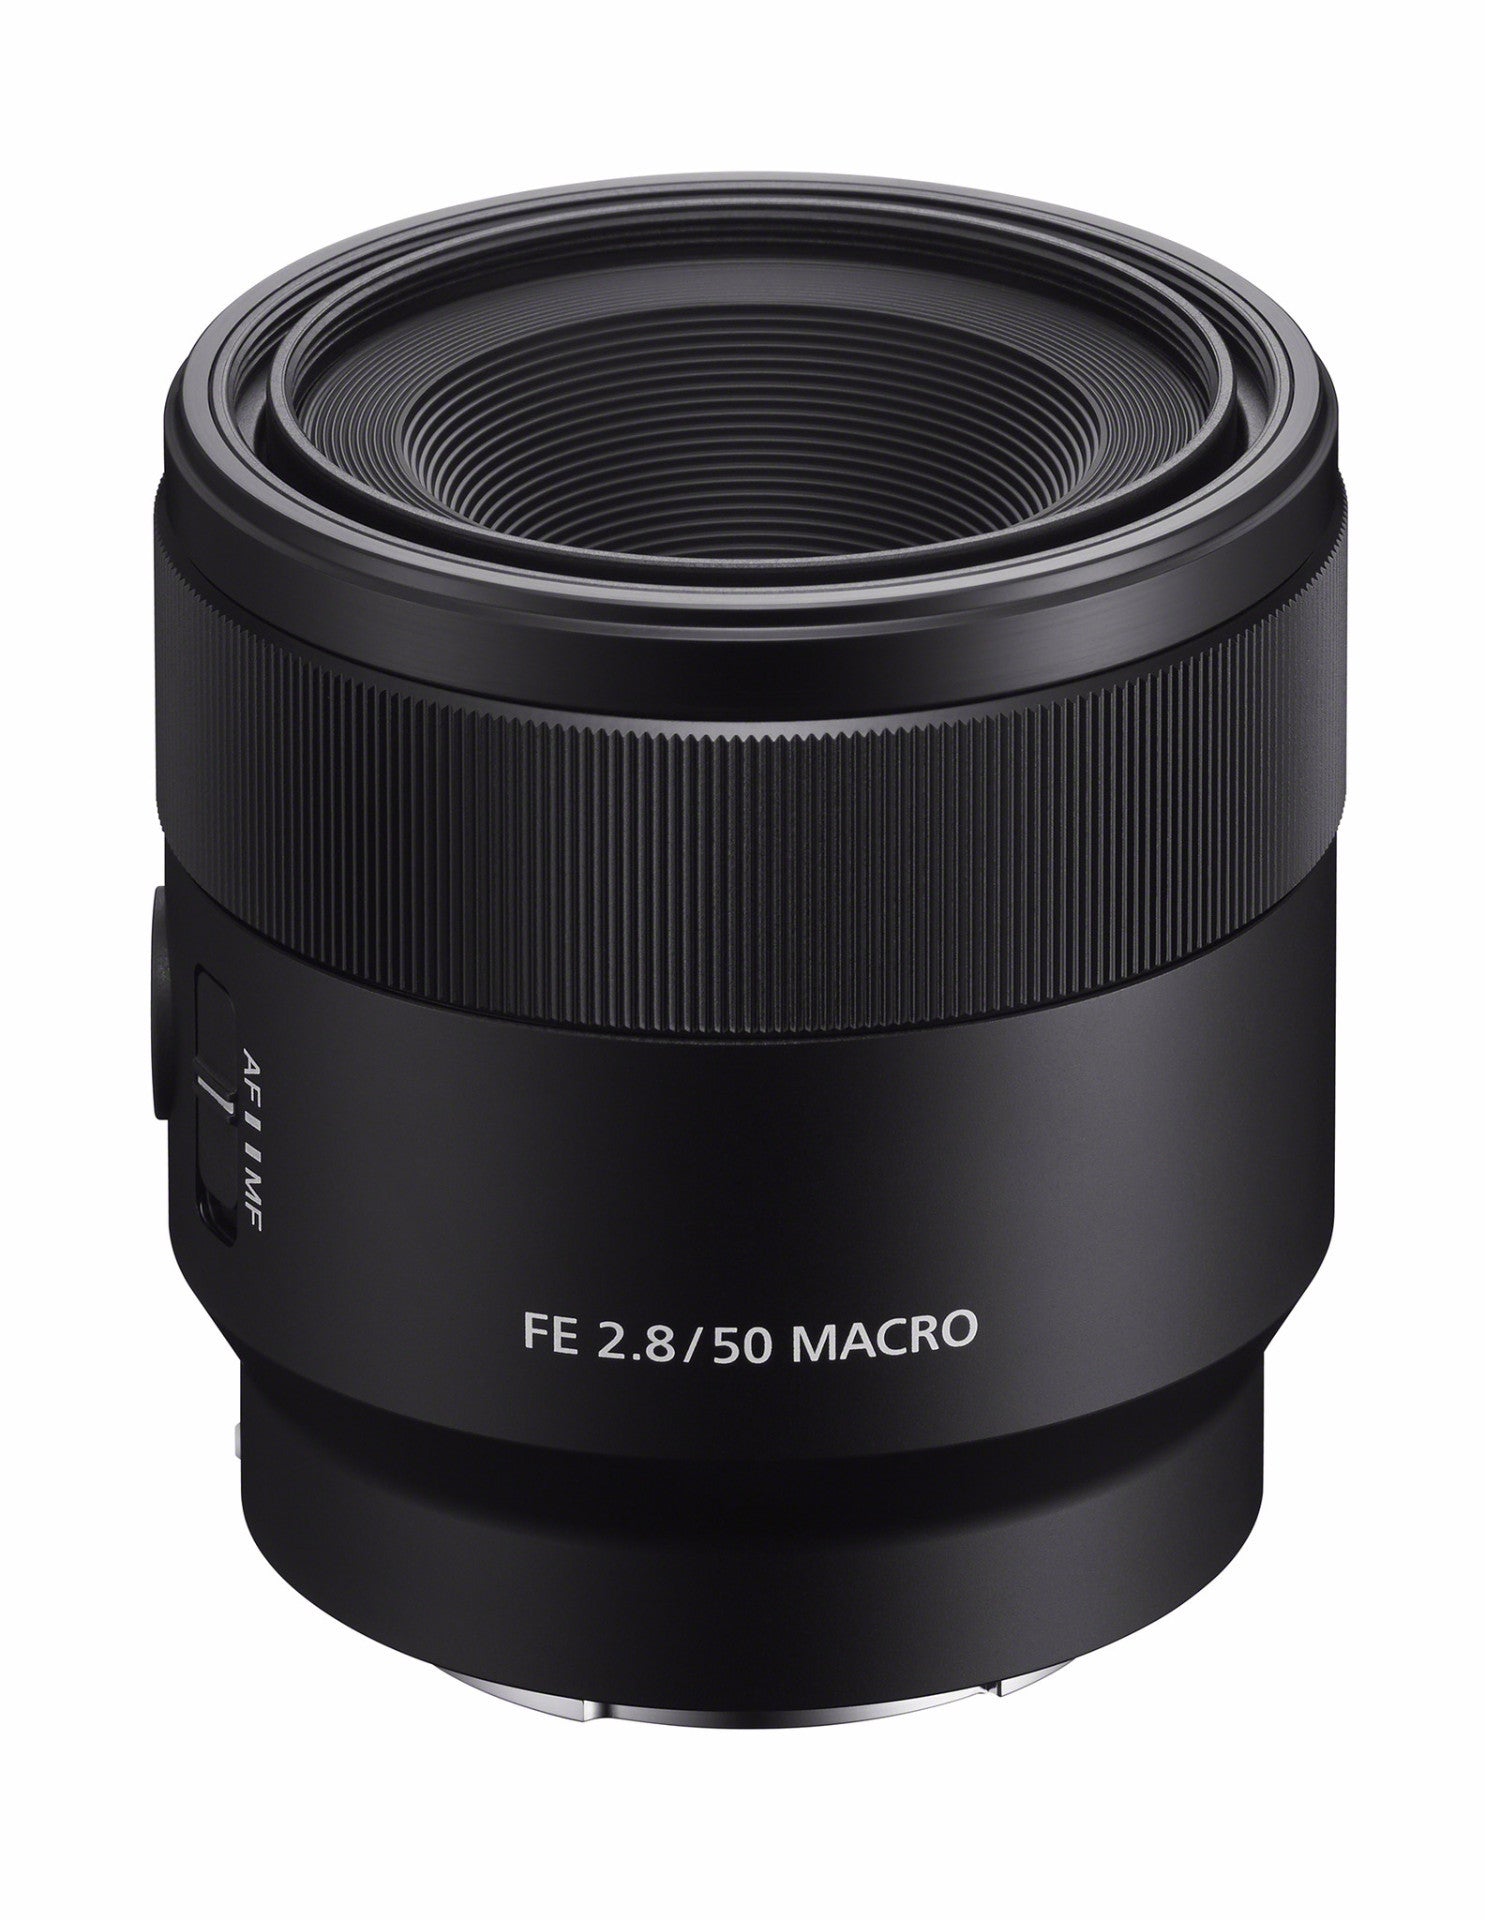 Sony FE 50mm f2.8 Macro Lens, lenses mirrorless, Sony - Pictureline  - 1